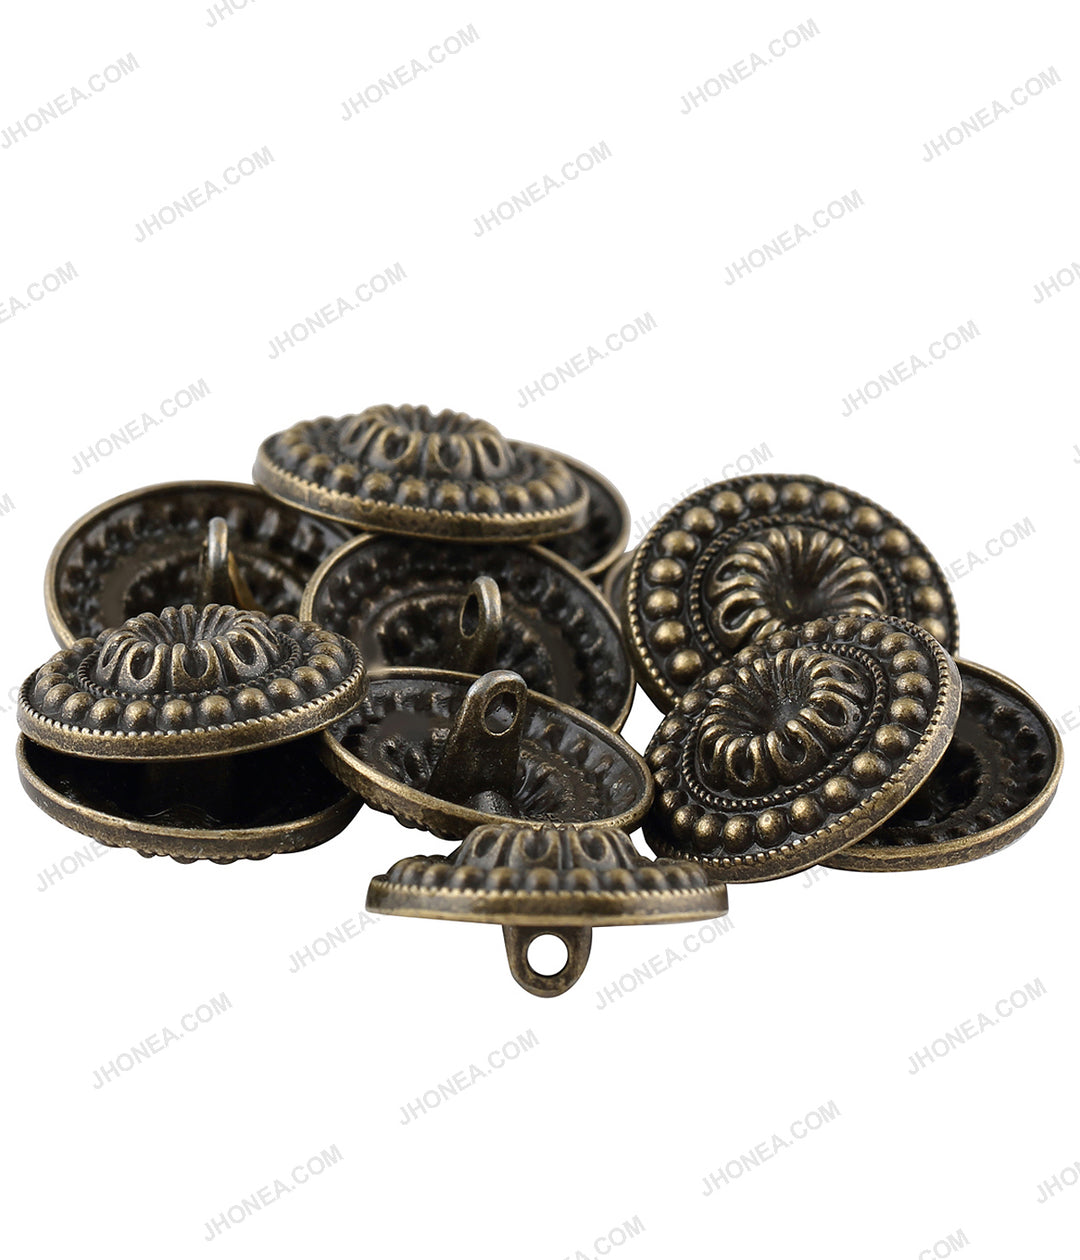 Antique Brass & Antique Gold Vintage Design Ethnic Buttons